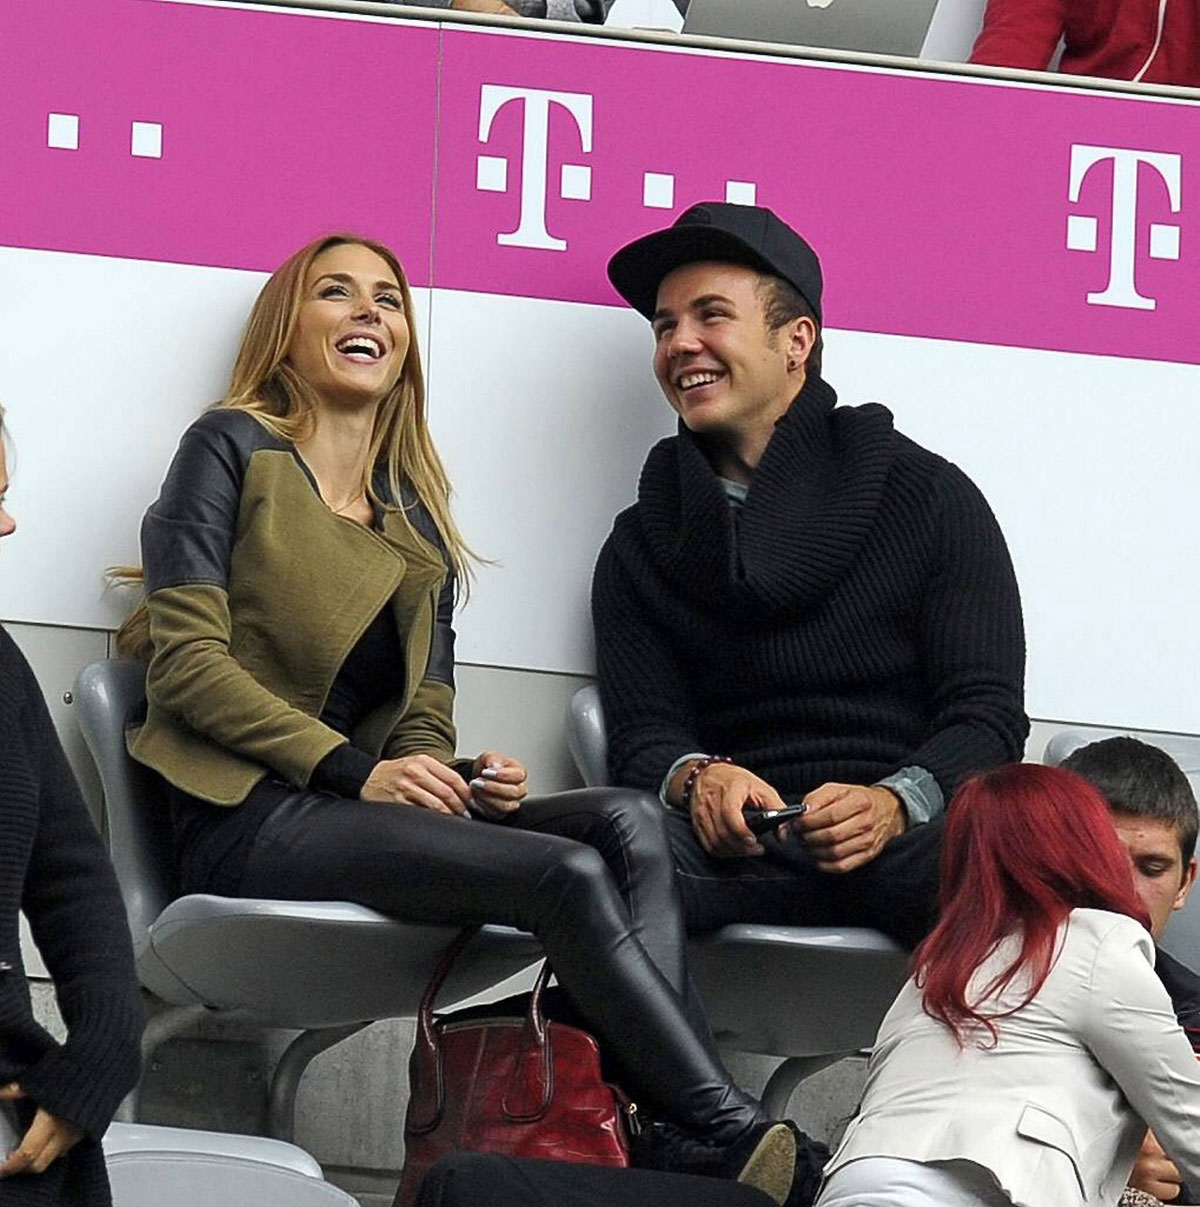 Ann-Kathrin Brommel at Bayern Munich vs Hannover